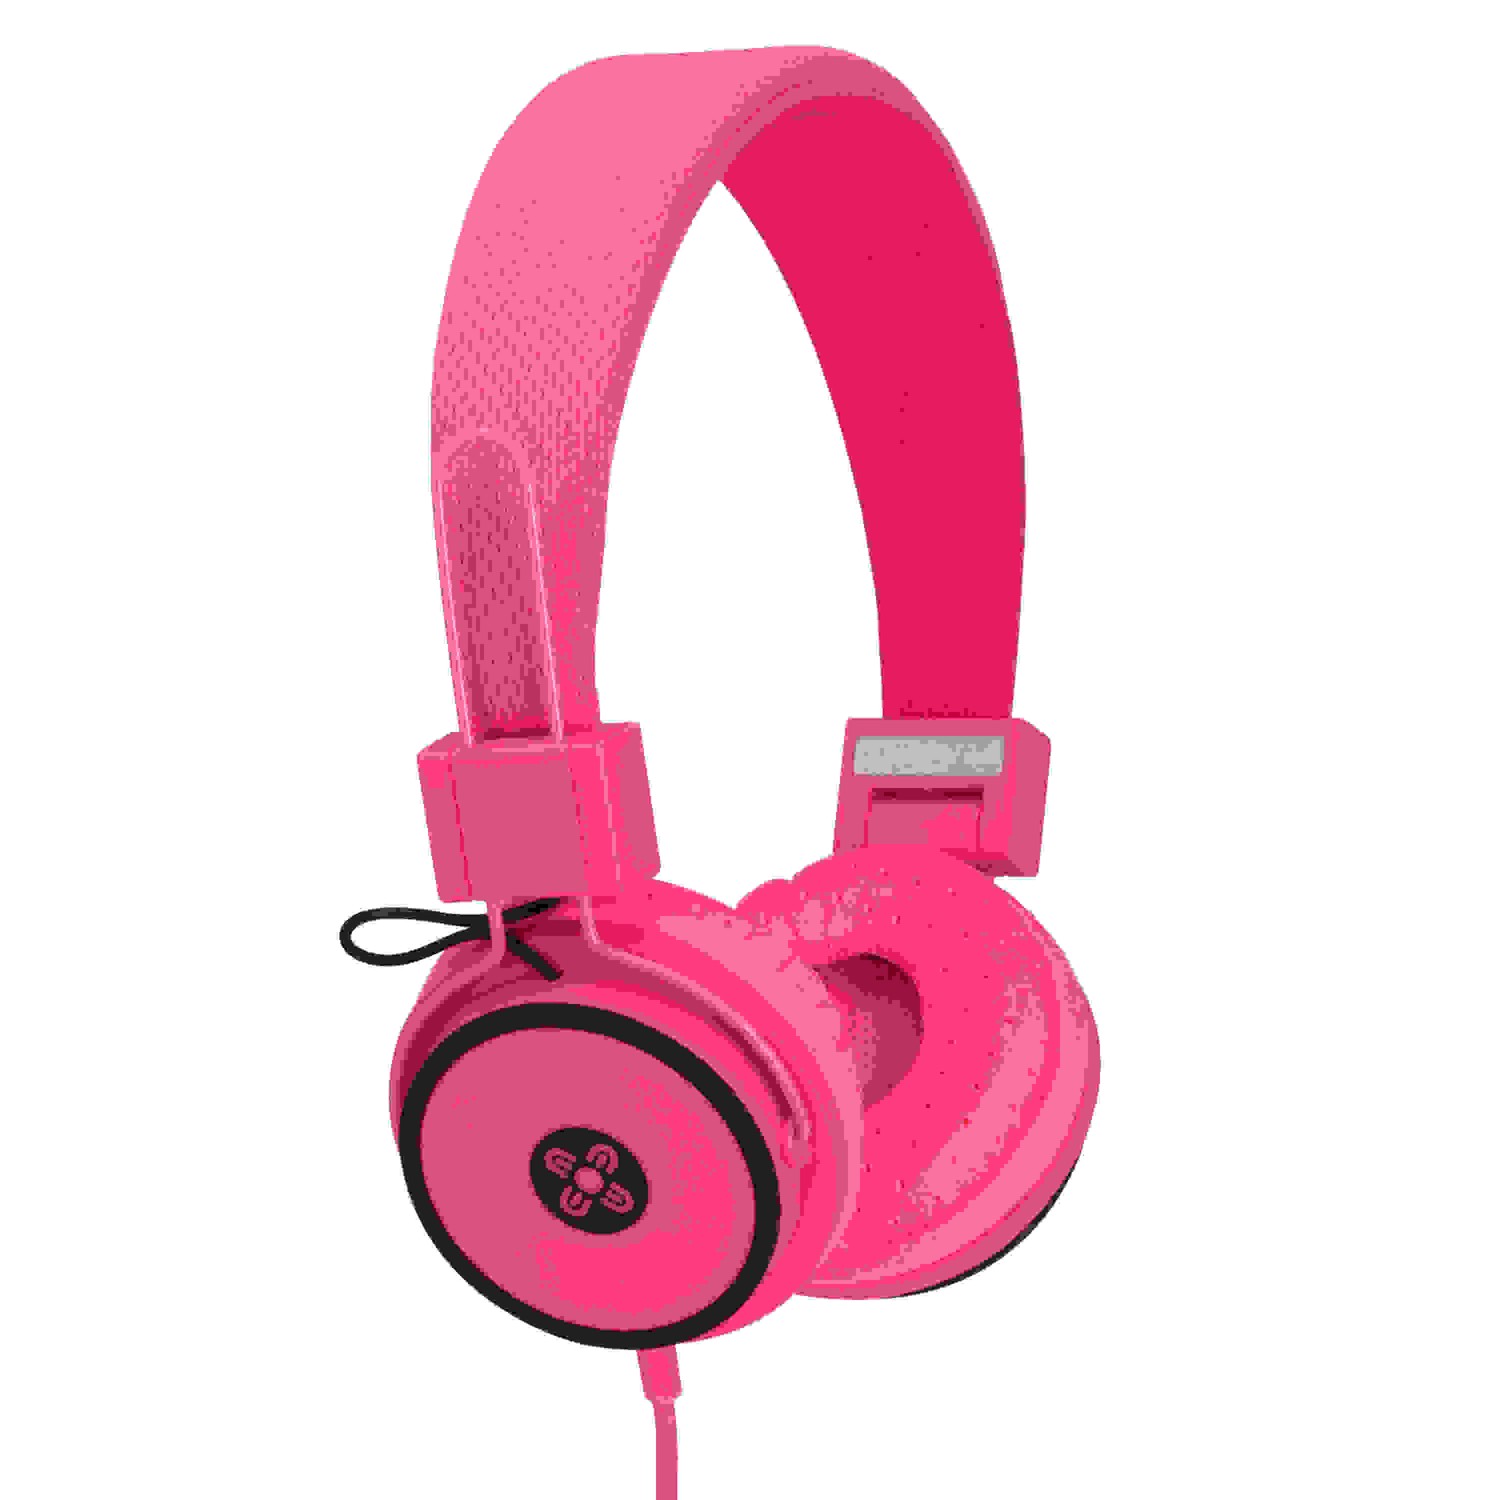 Moki ACC HPHYP Pink Hyper Headphones Are Lightweight Yet